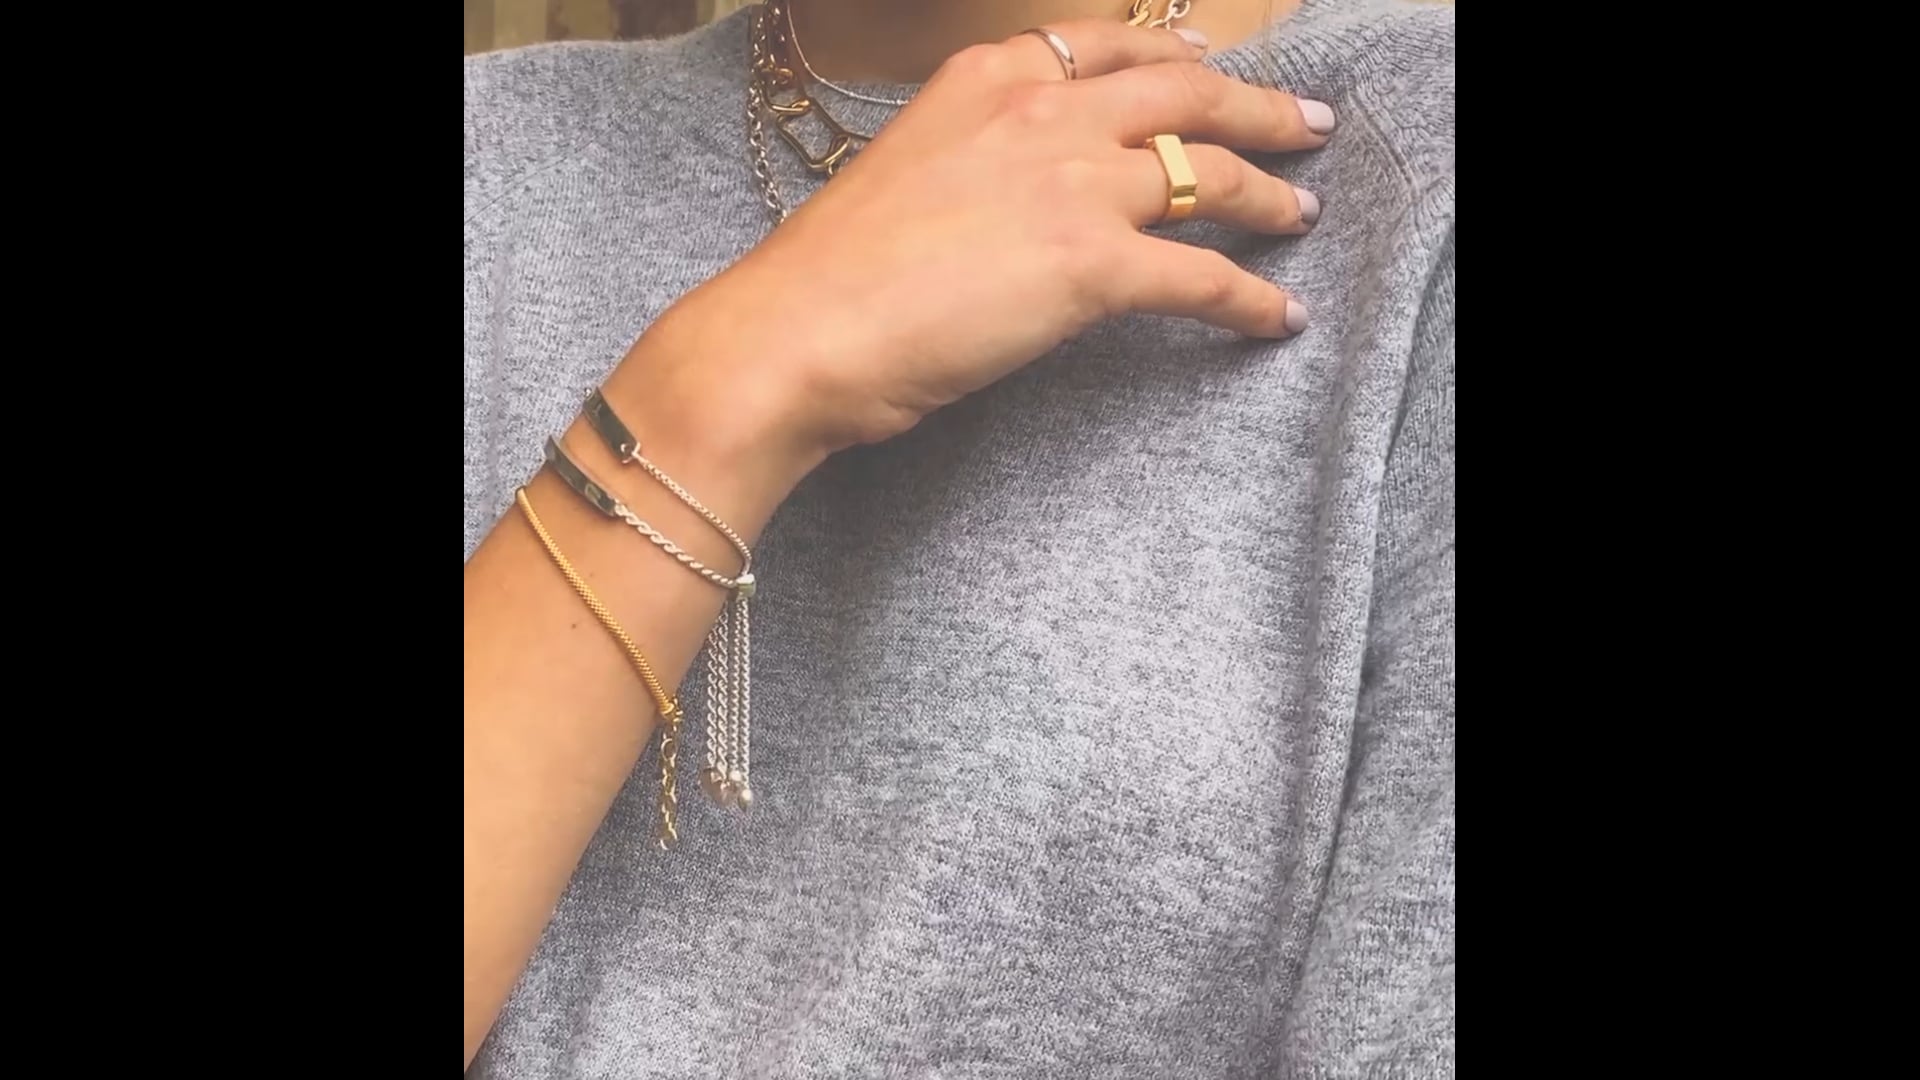 Corda Fine Chain Friendship Bracelet in 18k Gold Vermeil on Sterling Silver